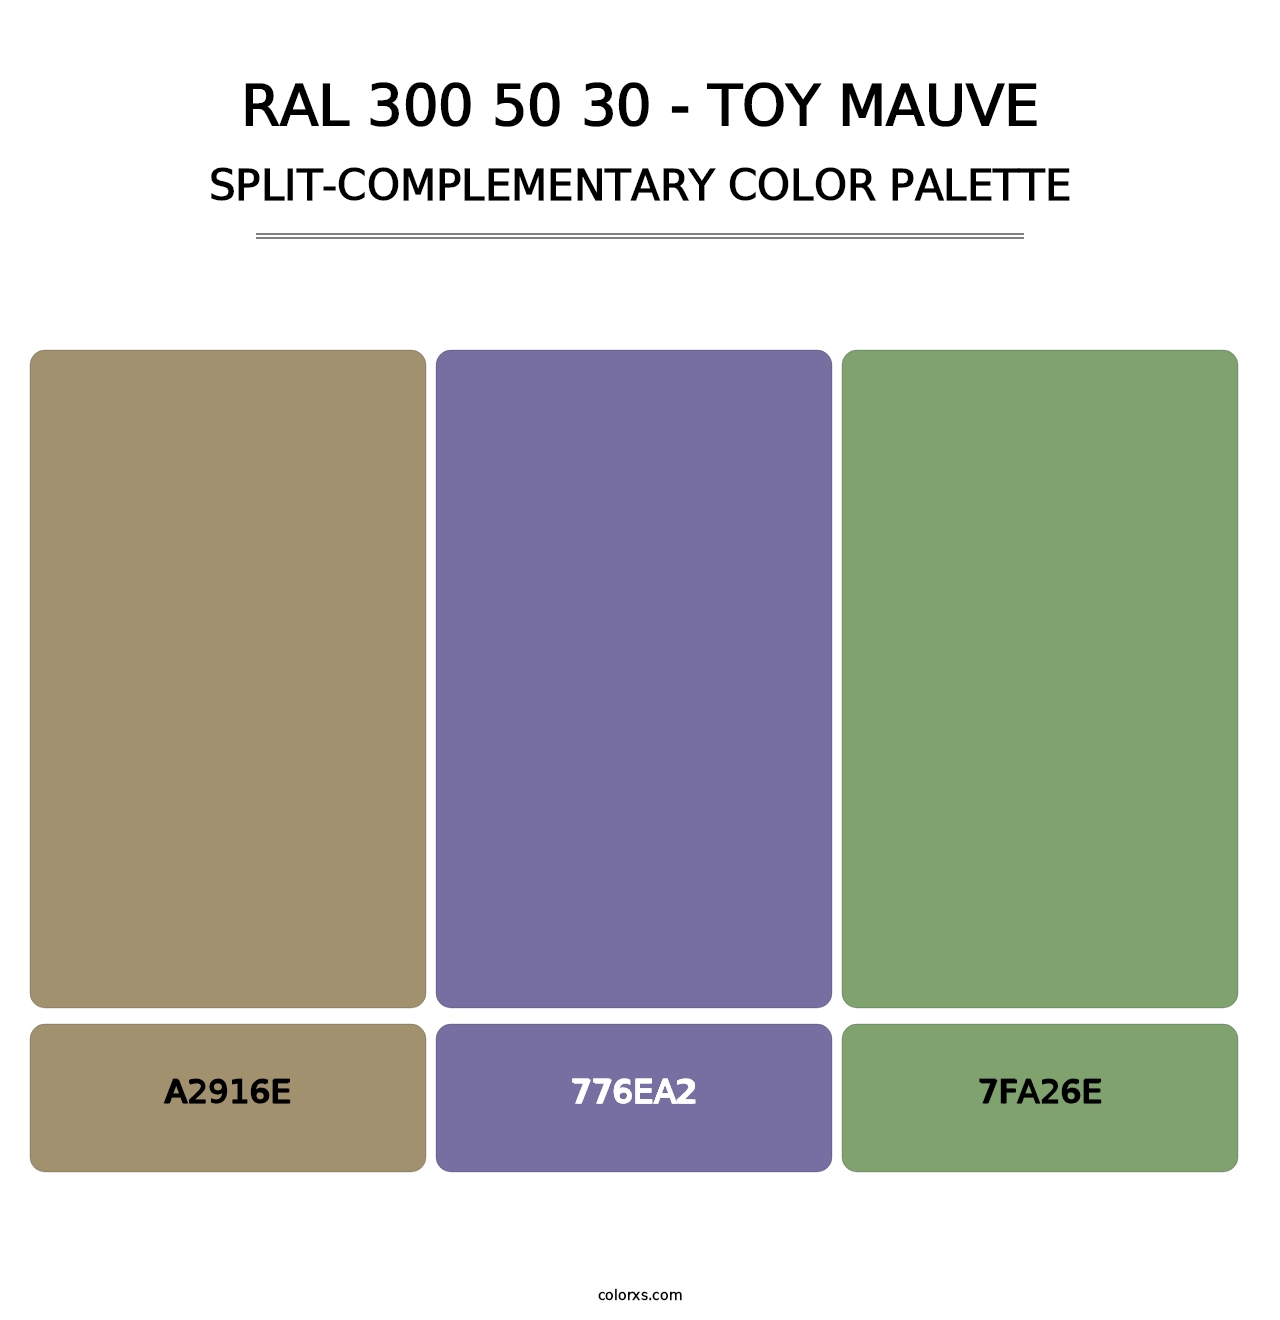 RAL 300 50 30 - Toy Mauve - Split-Complementary Color Palette